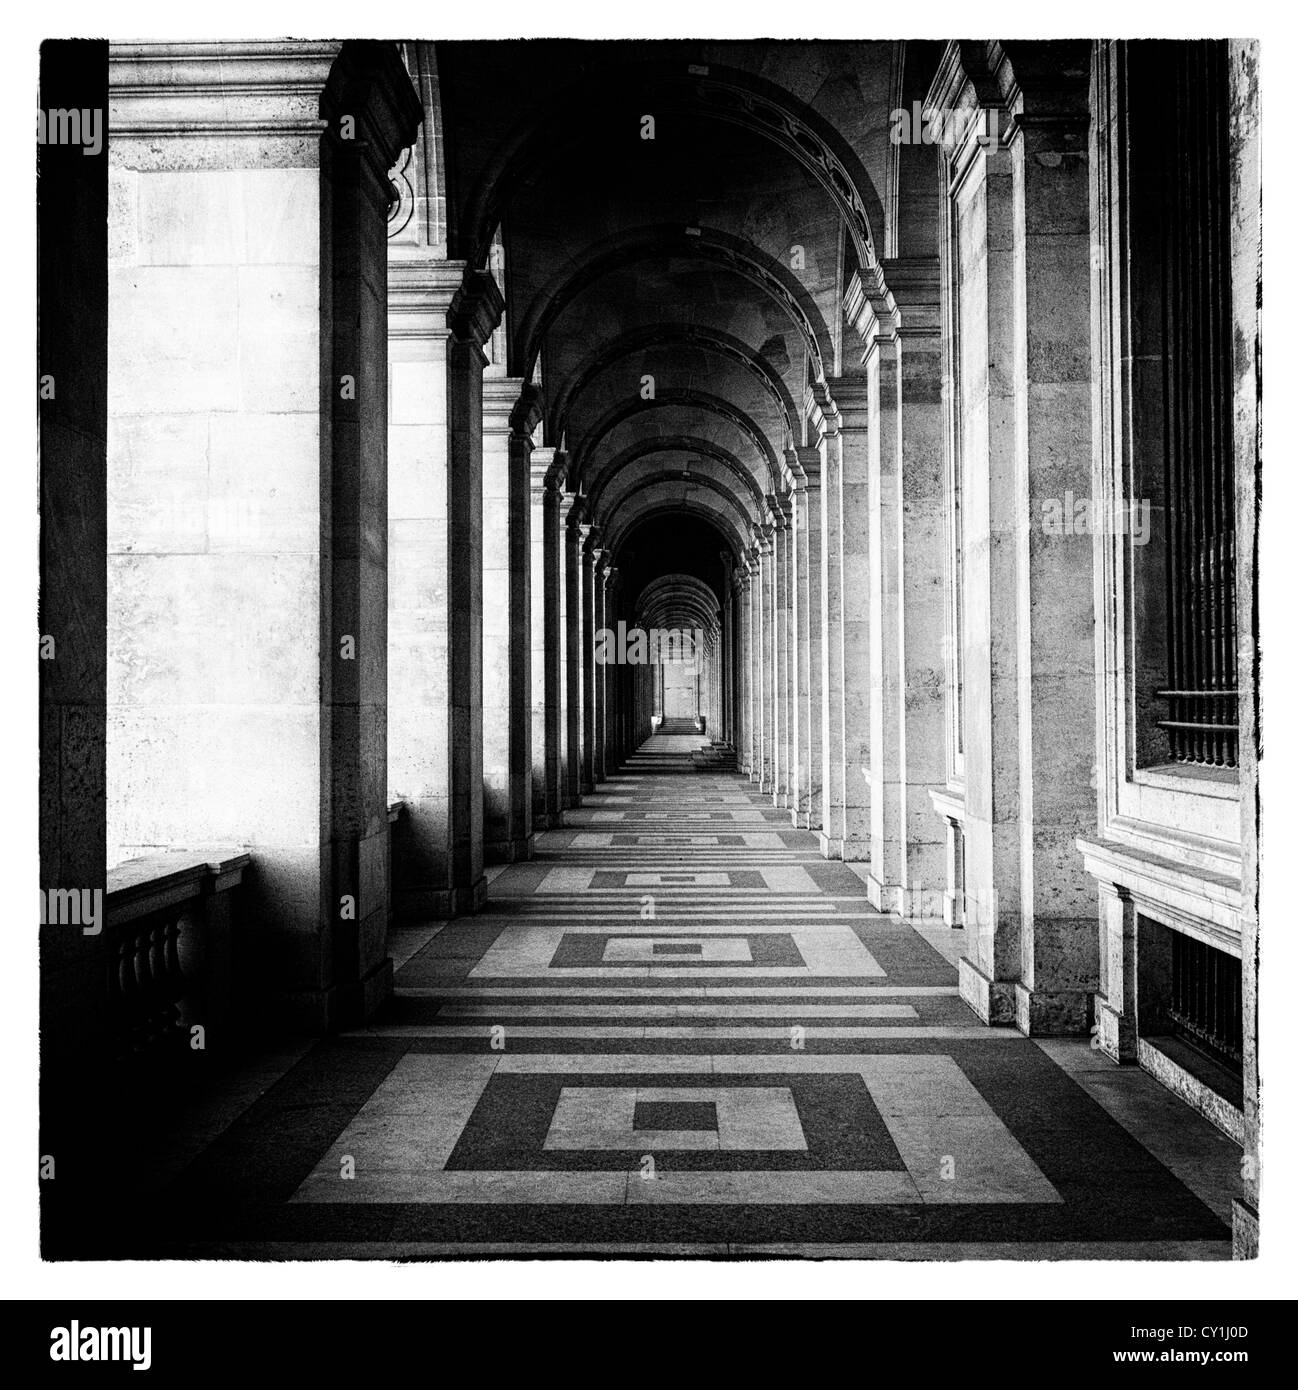 Passageway in grand building Stock Photo